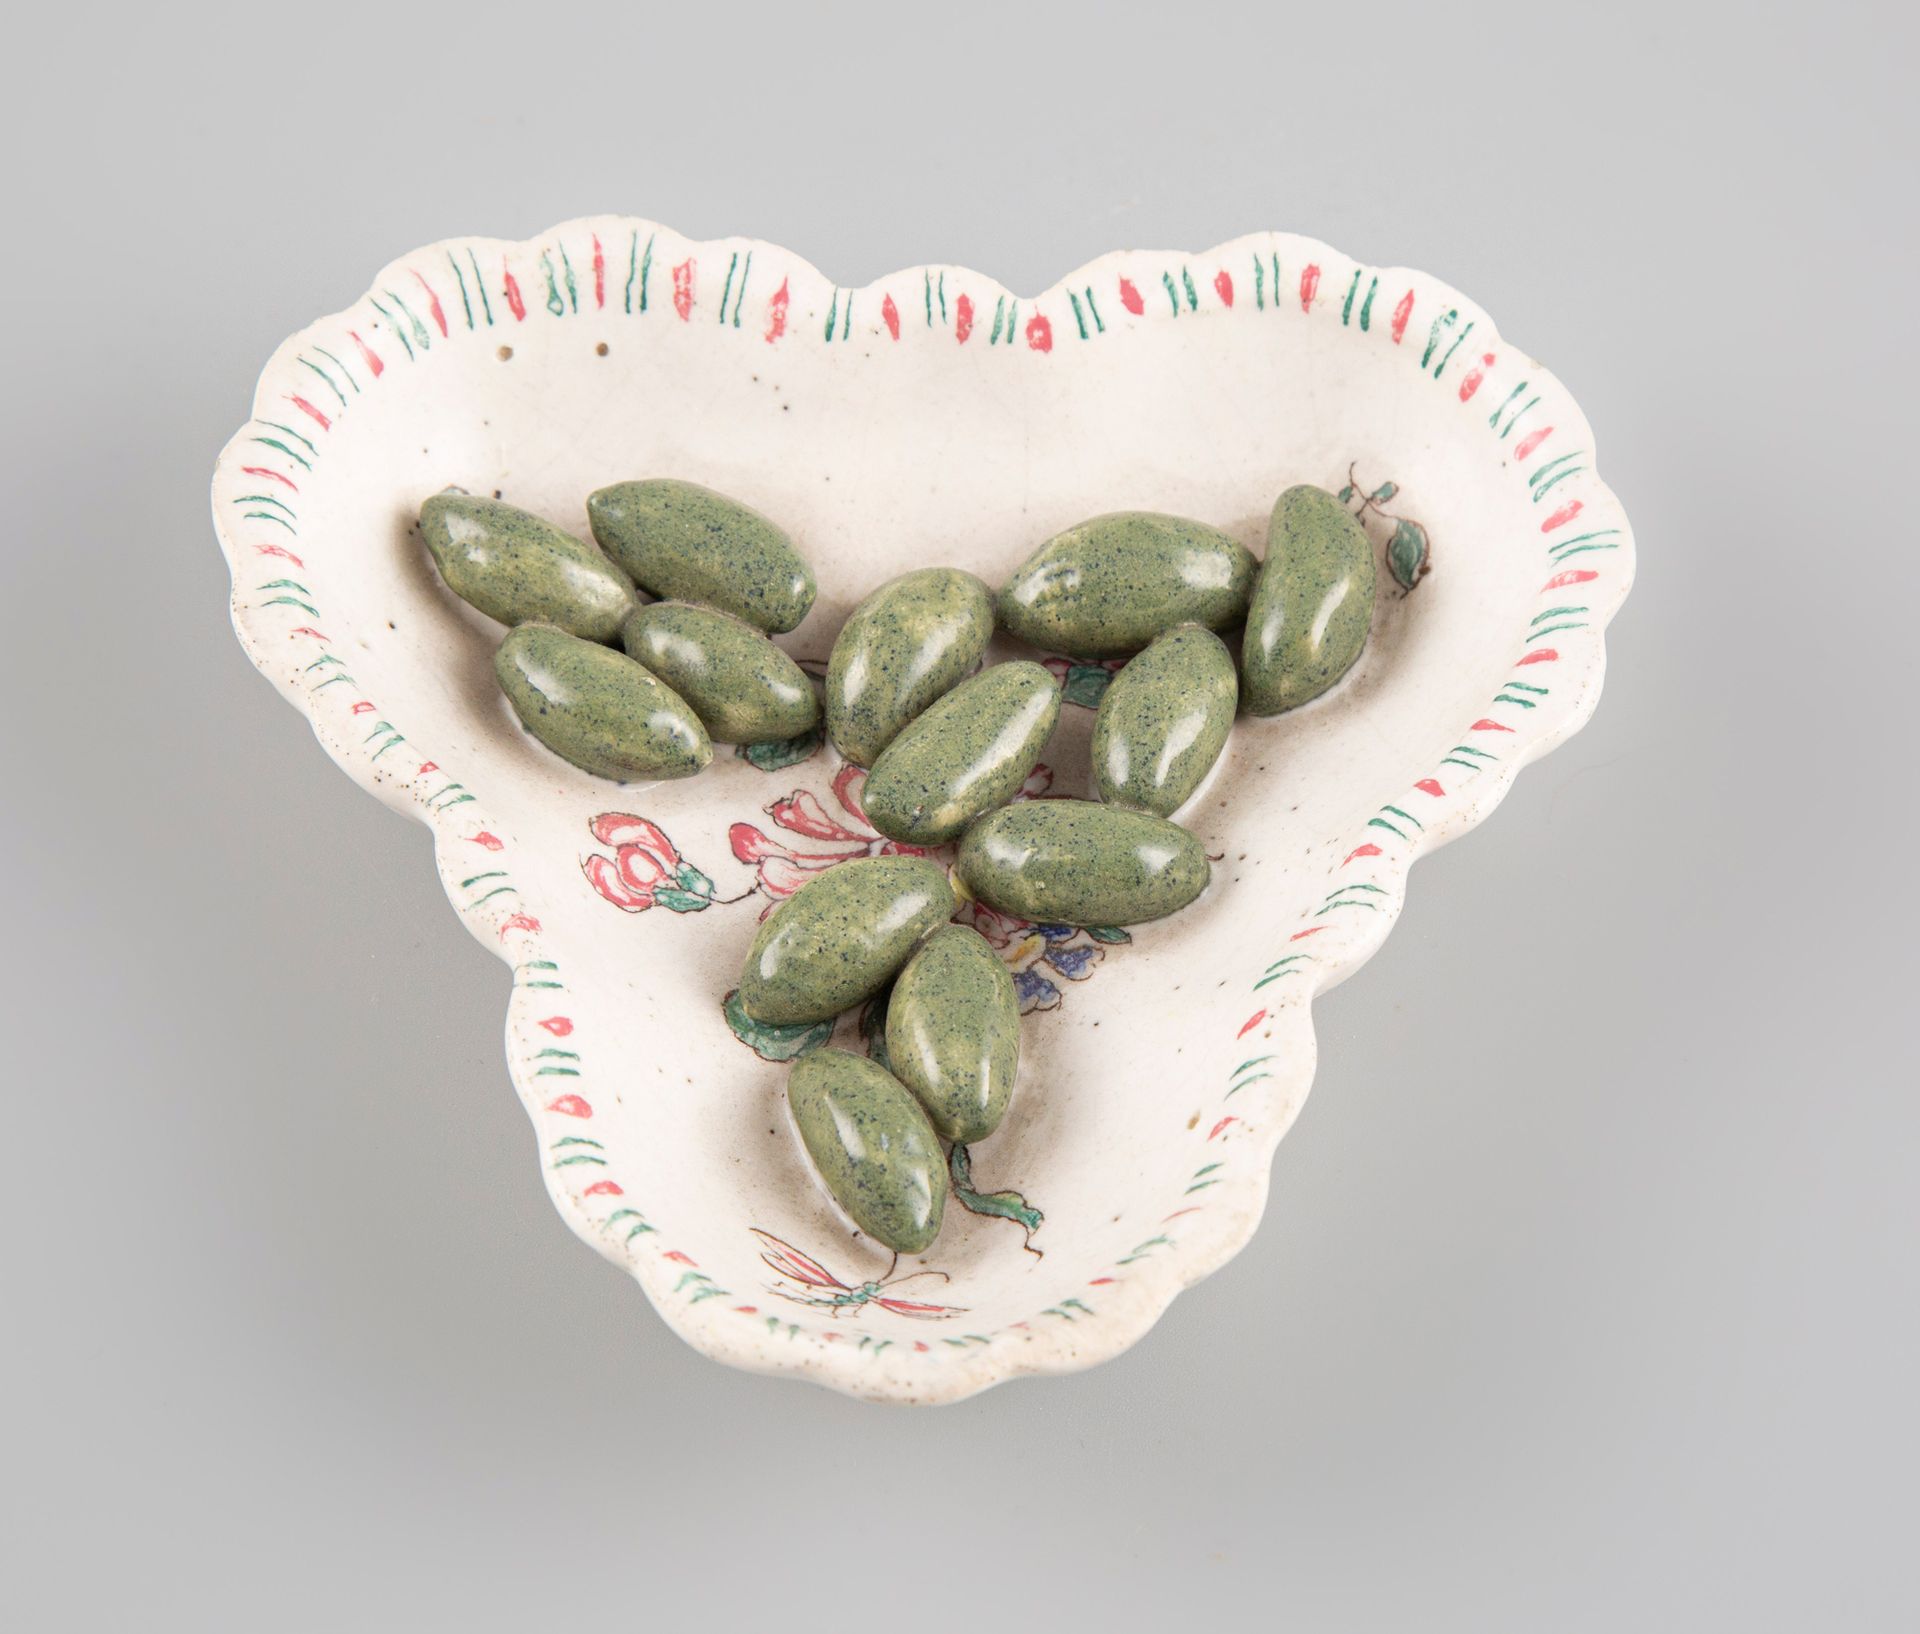 Null Curiosa ciotola decorativa, Le olive verdi

Terracotta. Tredici mandorle ne&hellip;